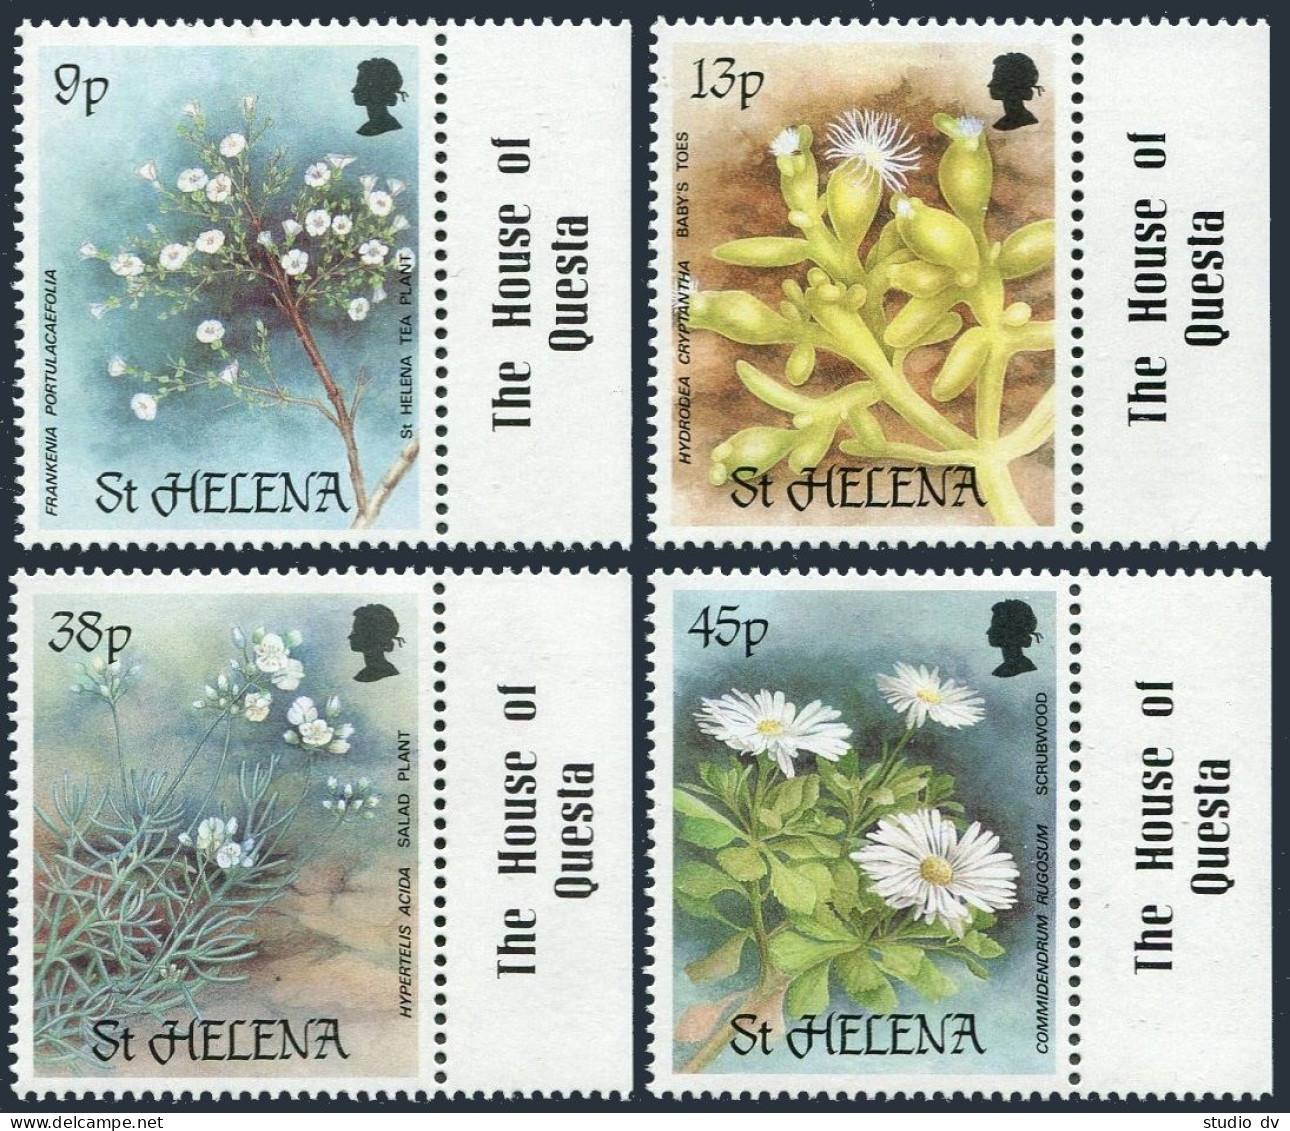 St Helena 479-482, MNH. Mi 469-472. 1987. Ea Plant, Baby's Toes,Salad, Scrubwood - Saint Helena Island